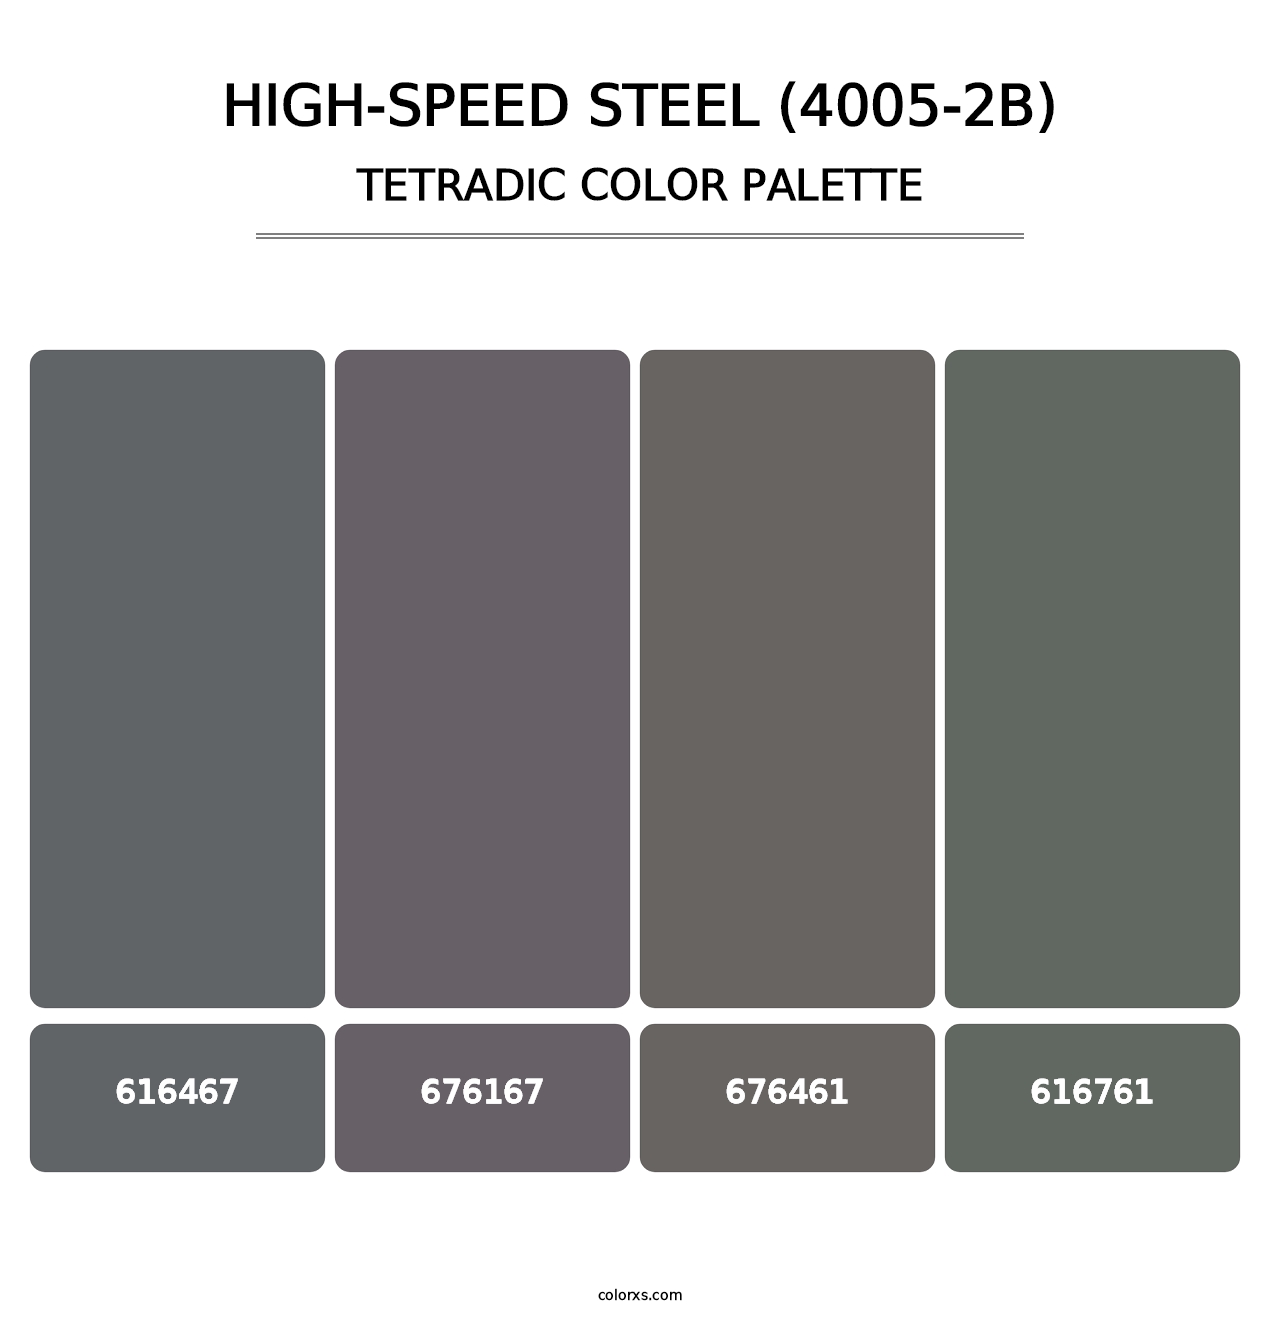 High-Speed Steel (4005-2B) - Tetradic Color Palette